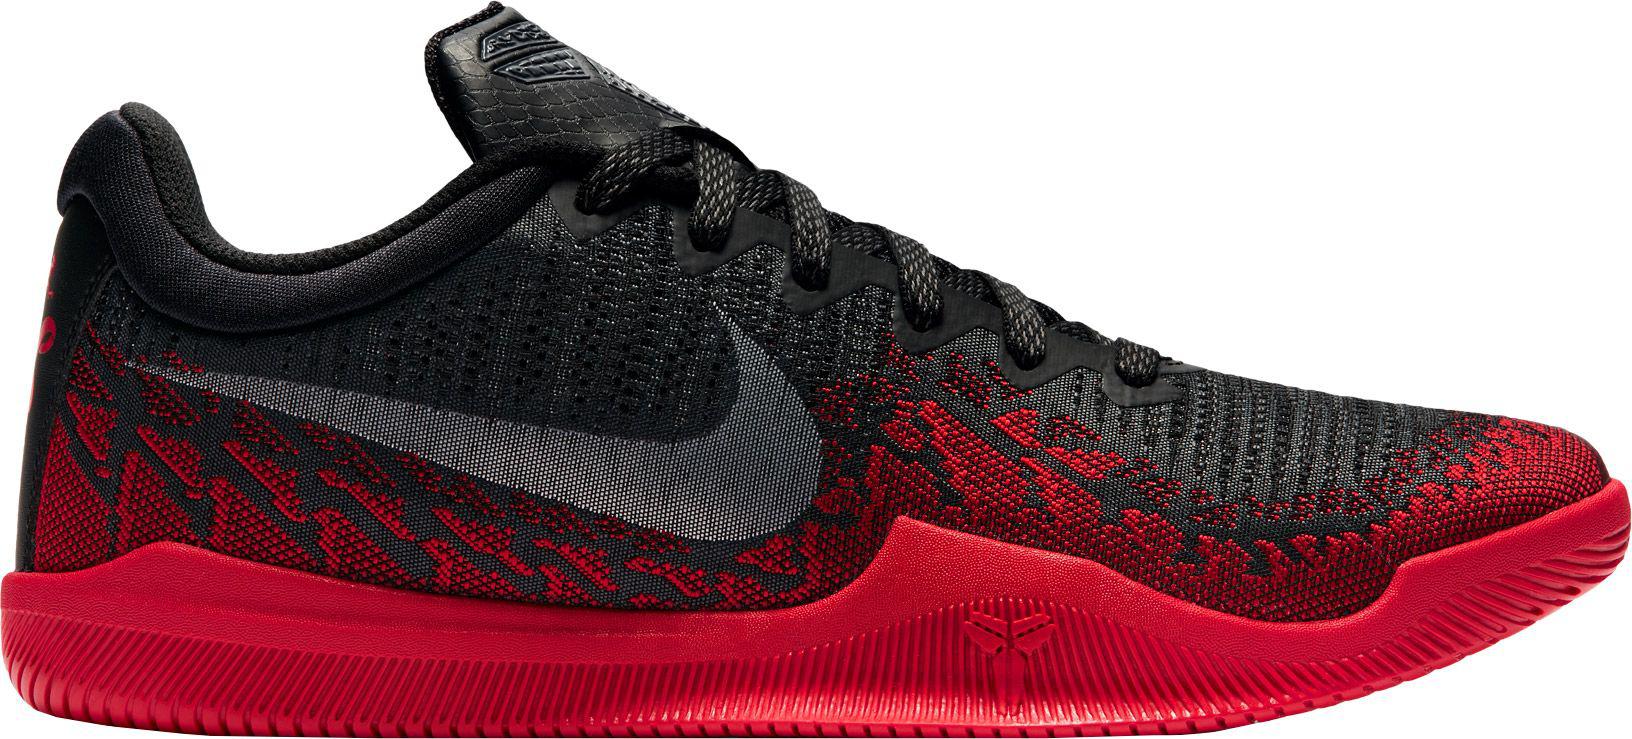 Lyst - Nike Kobe Mamba Rage Premium Basketball Shoes in Red for Men